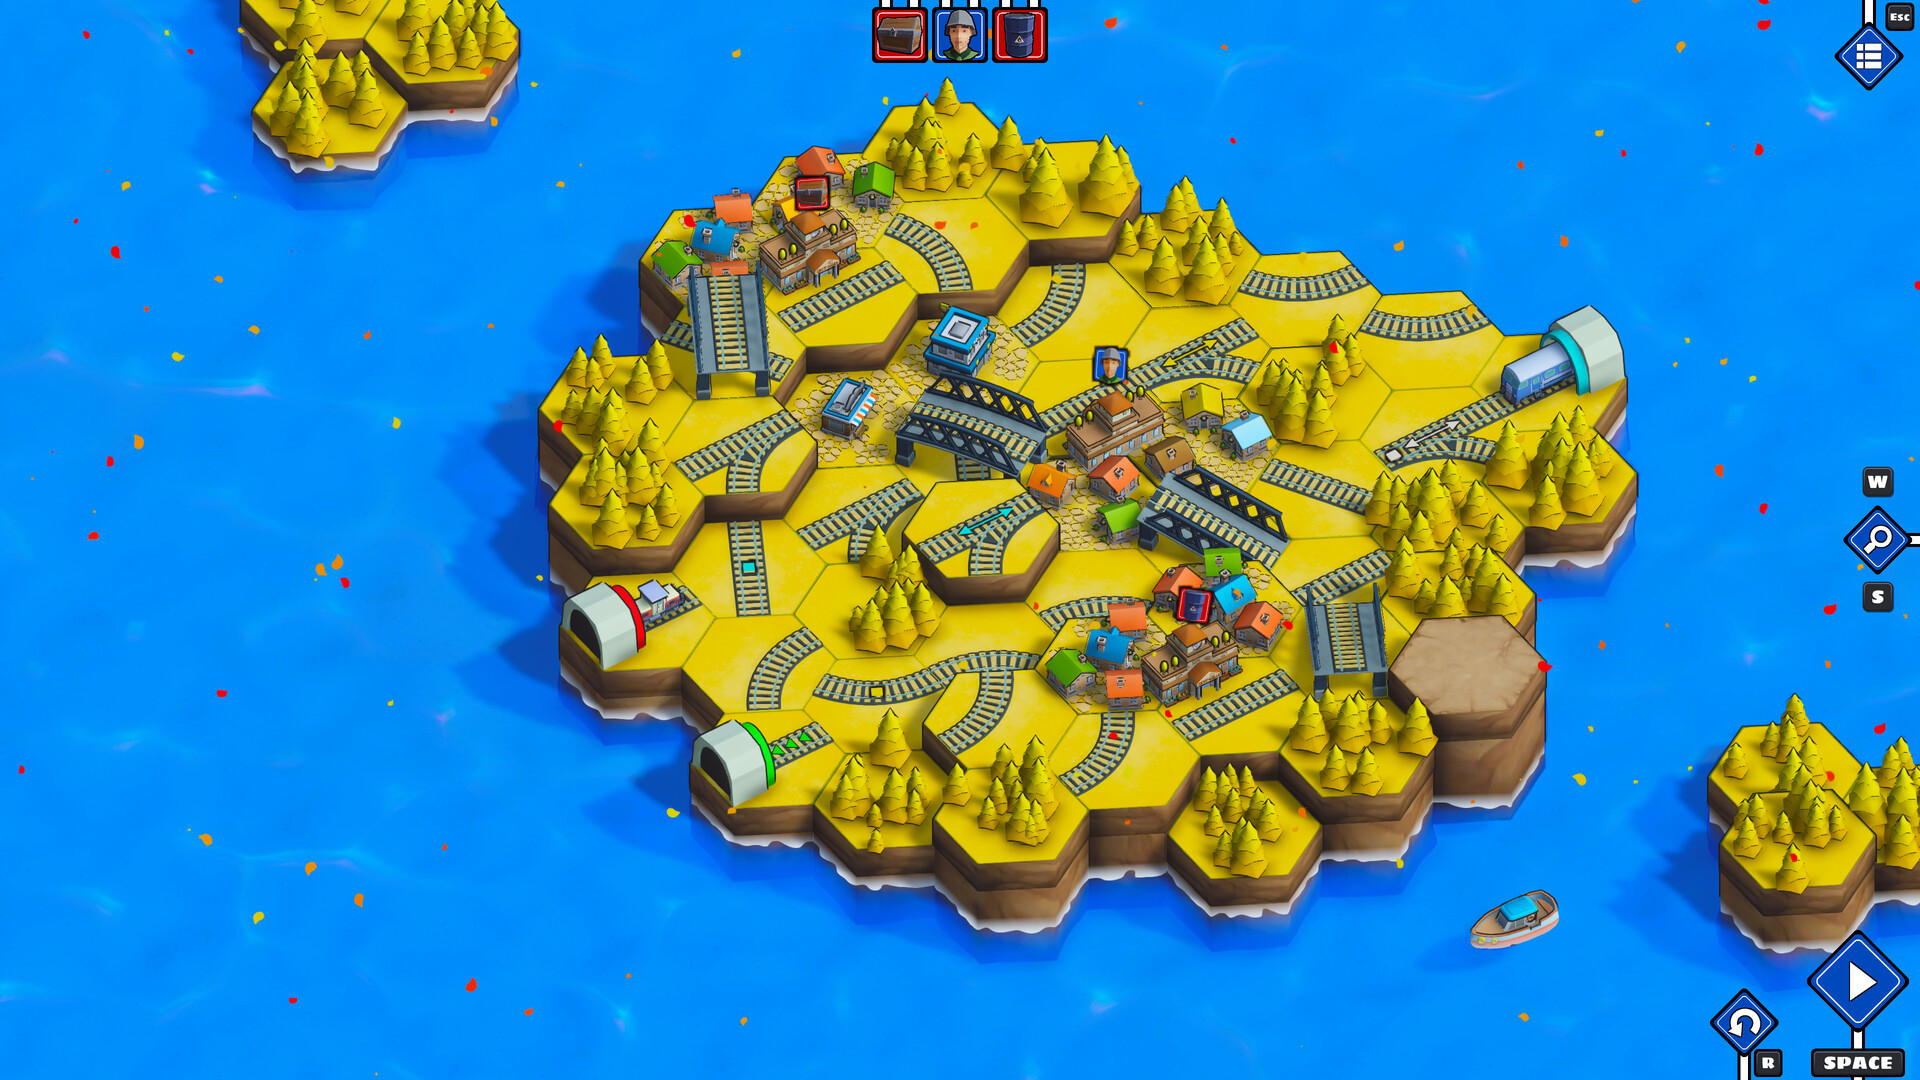 Railway Islands 2 - Puzzleのキャプチャ